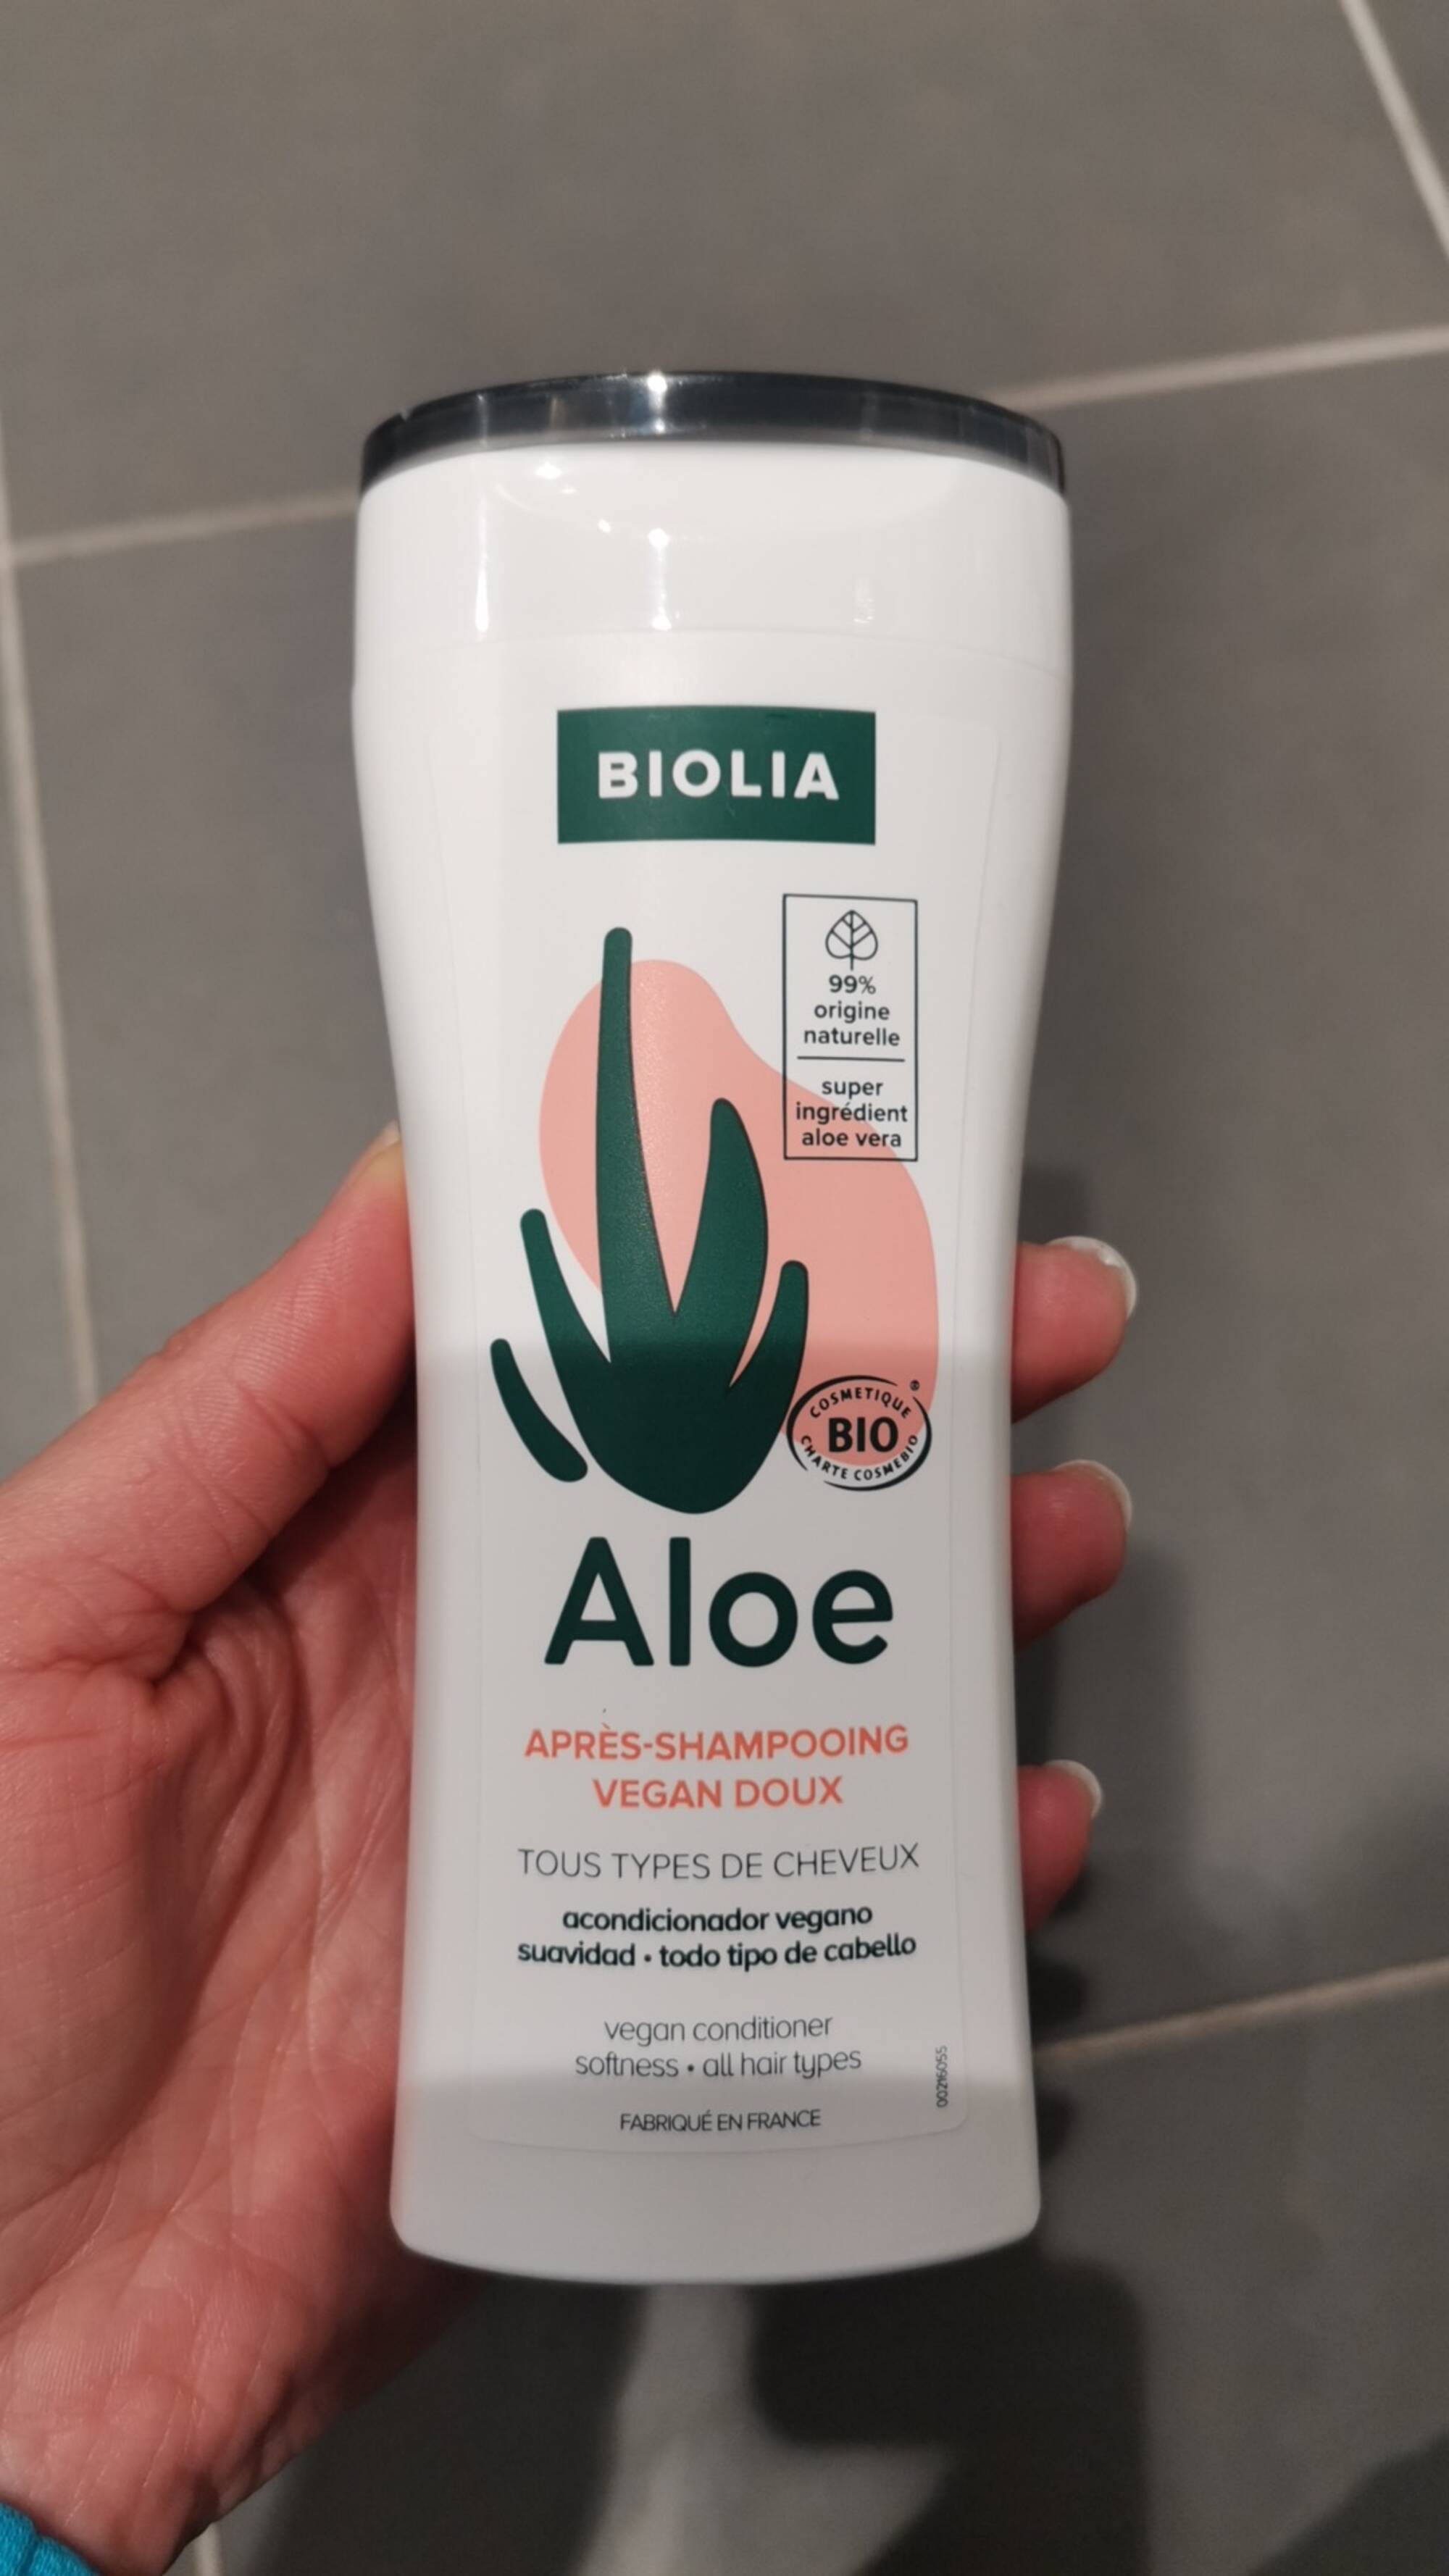 BIOLIA - Aloé - Après-shampooing vegan doux